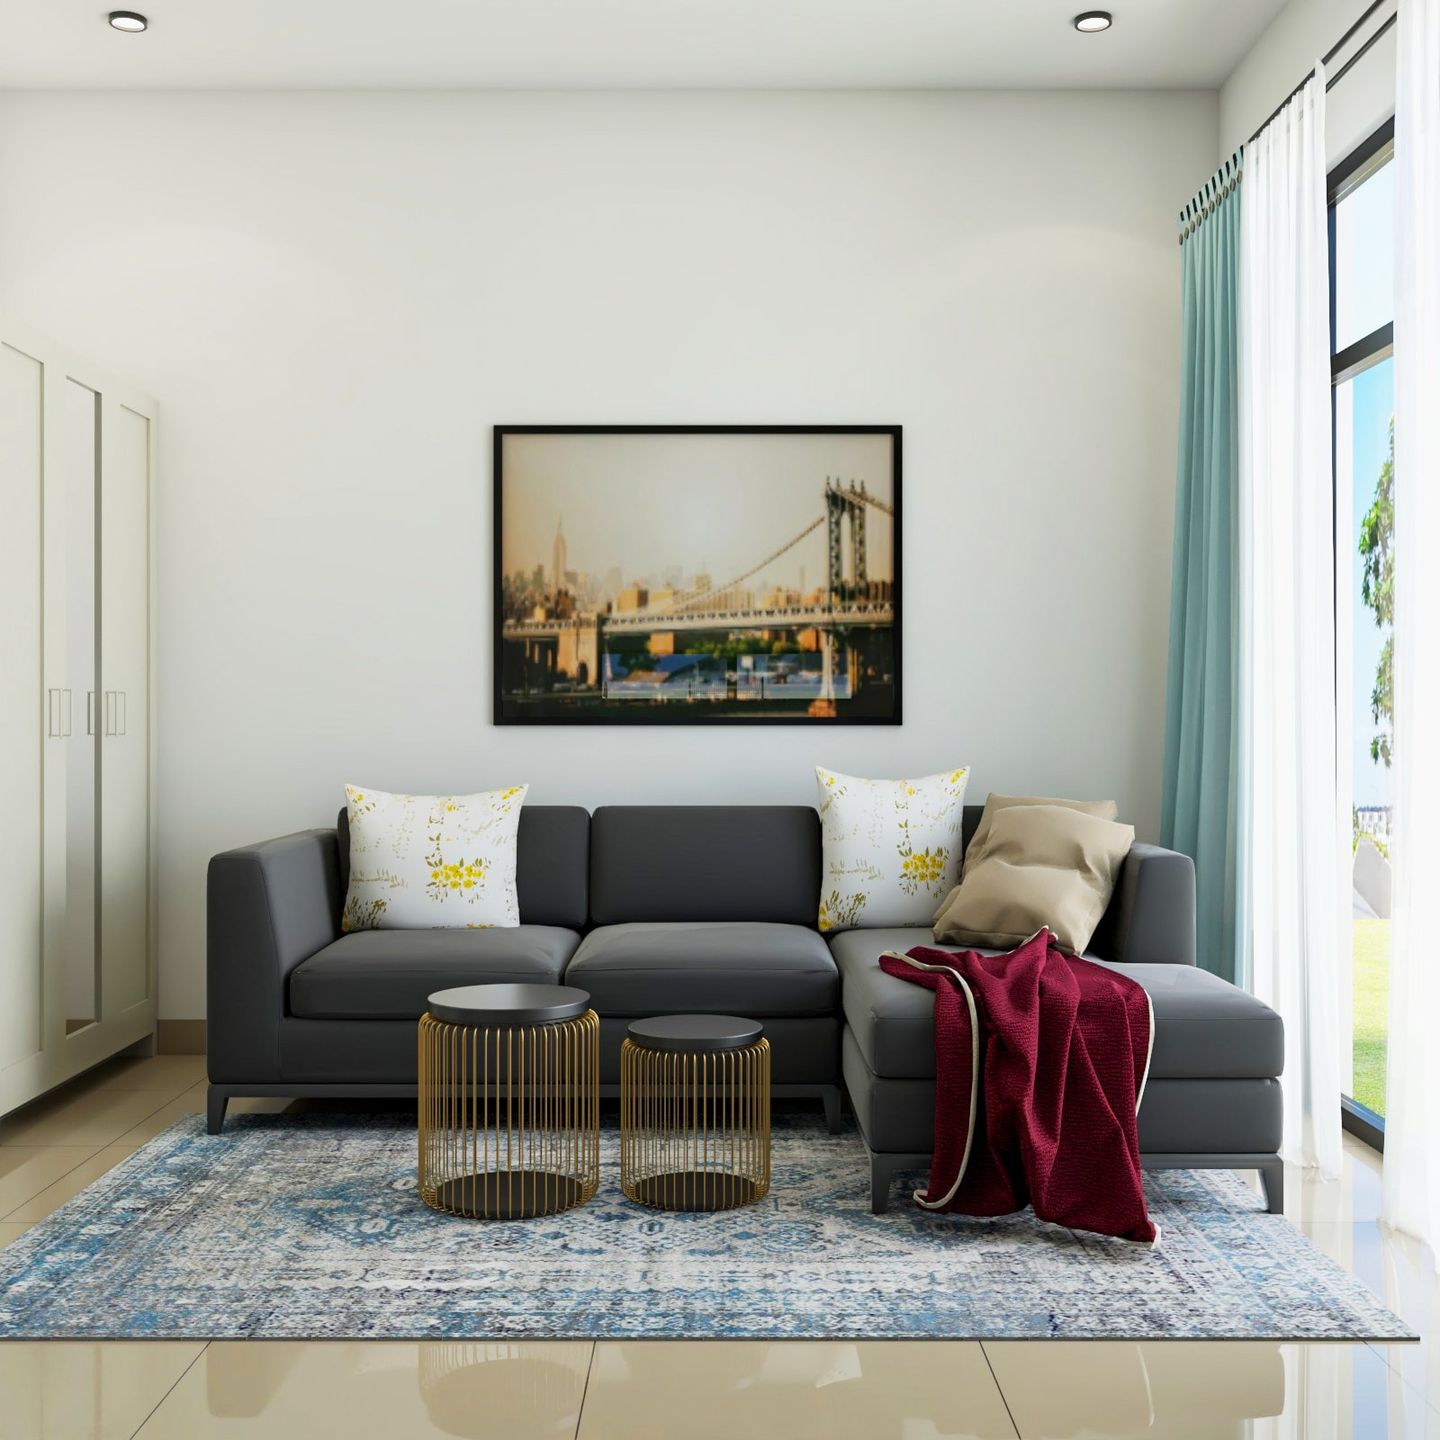 Neutral-Toned Living Room Interior Design - Livspace